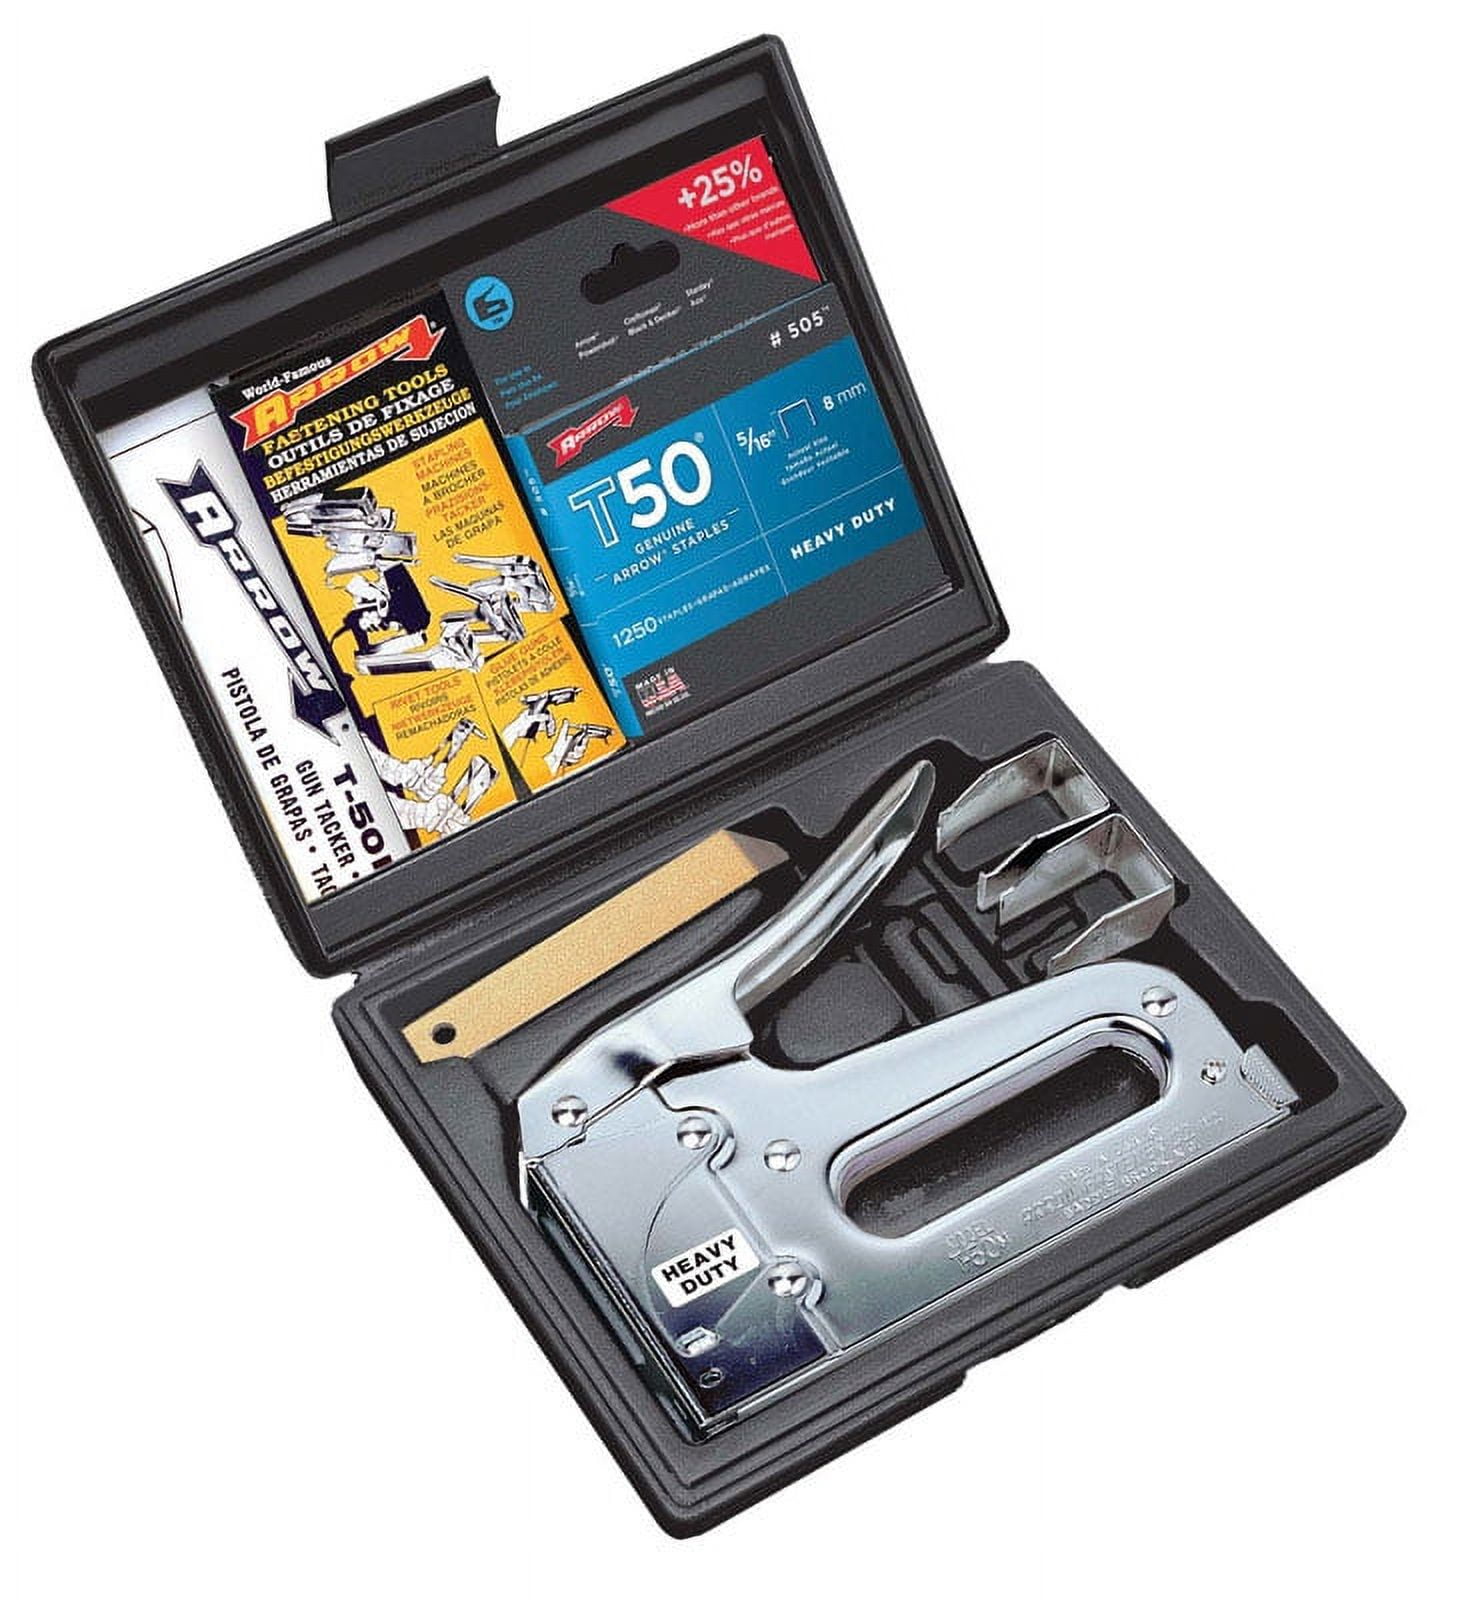 Arrow Fastener® 8000 - Powershot 8000 Pro™ 1/4 to 9/16 Staple and Nail Gun